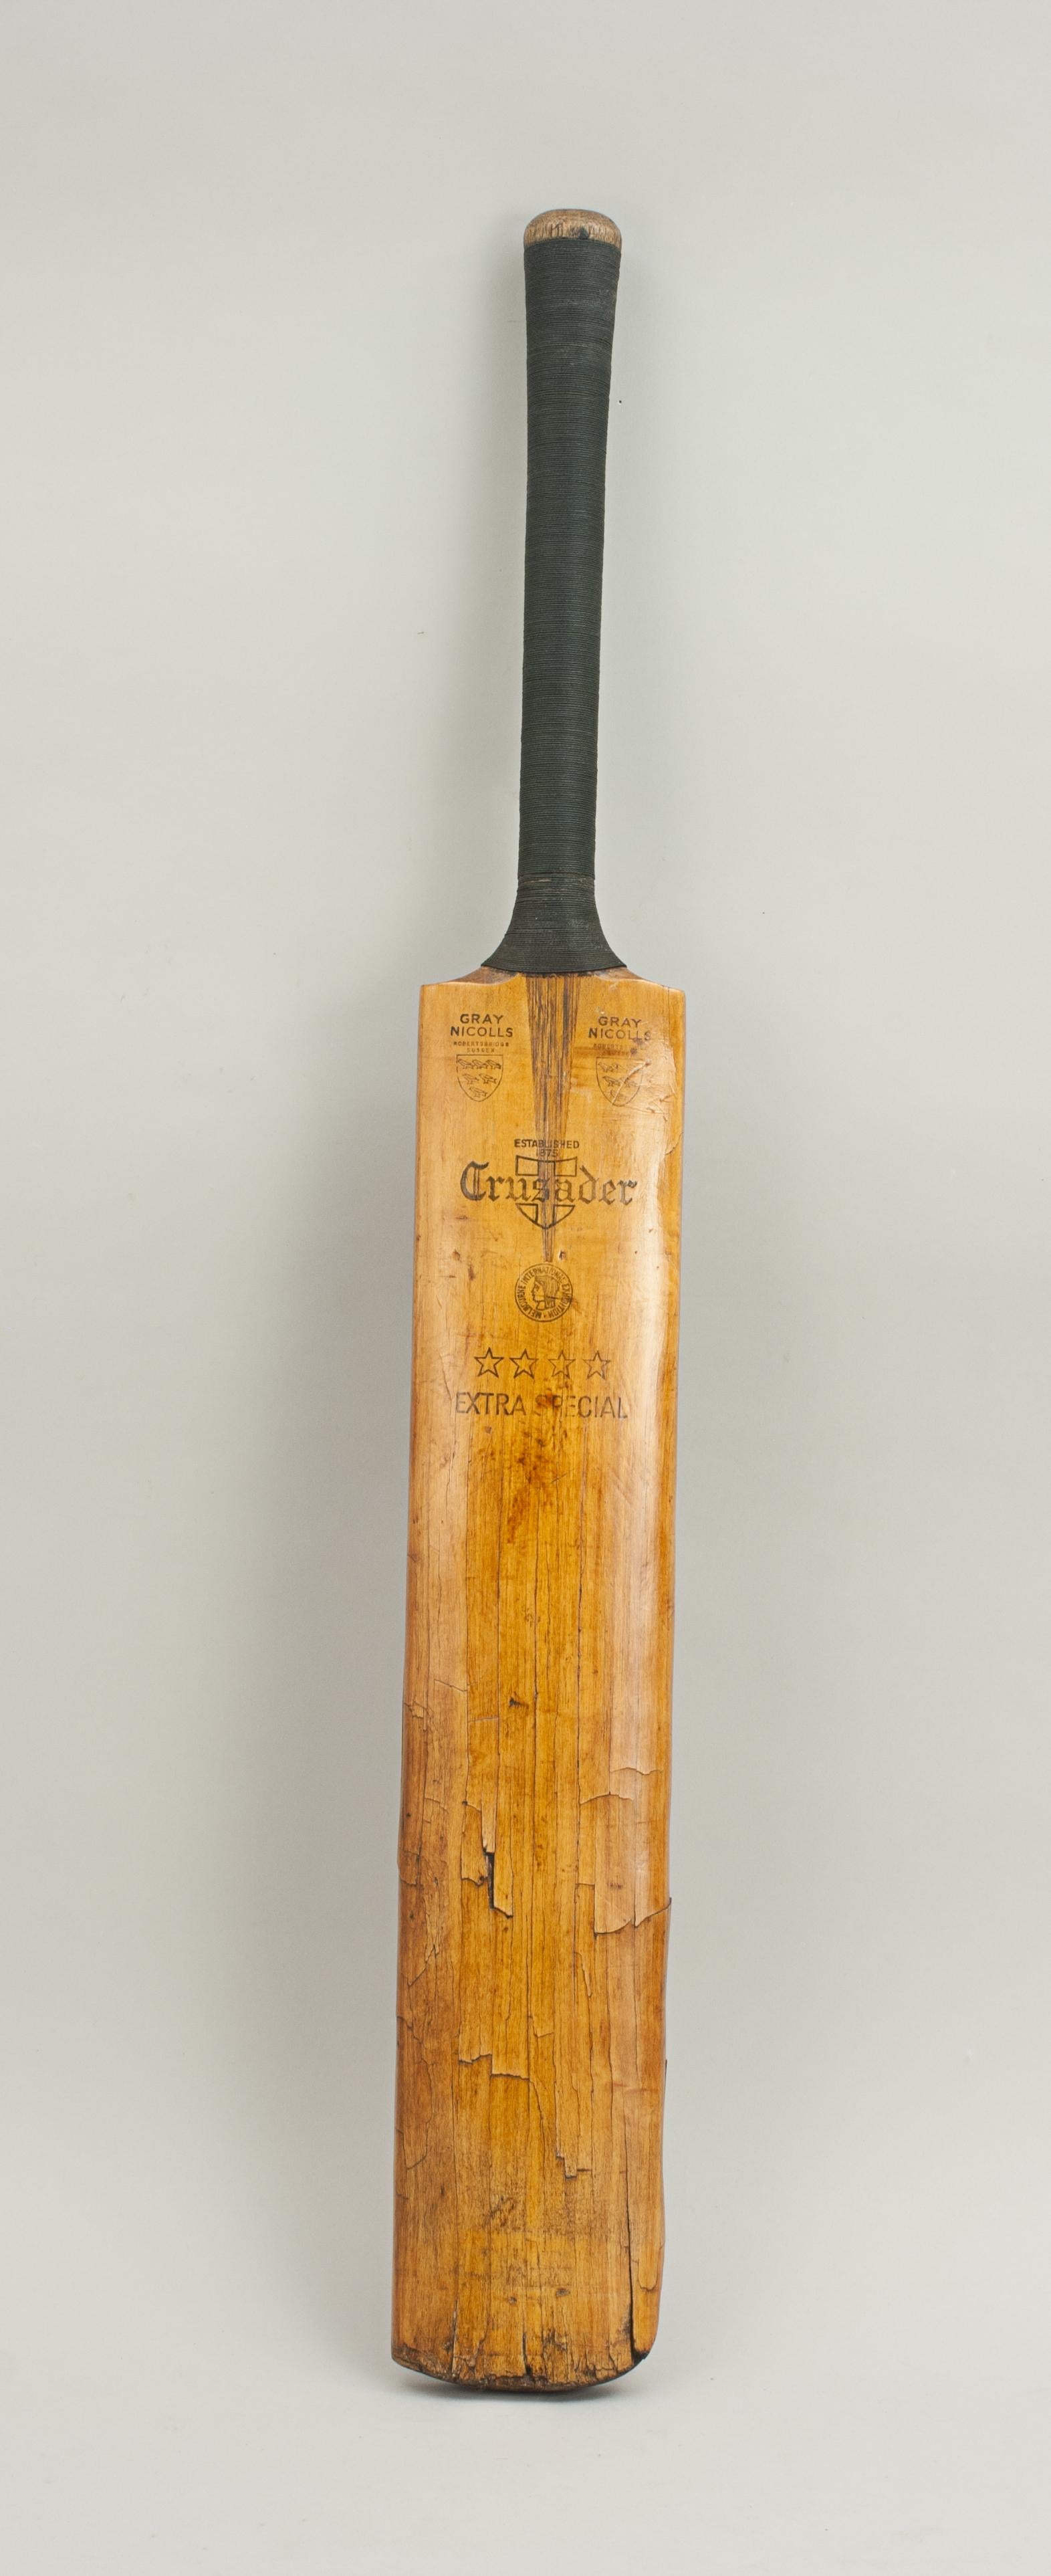 Willow Vintage Cricket Bat, Gray Nicolls Crusader Cricket Bat Melbourne International